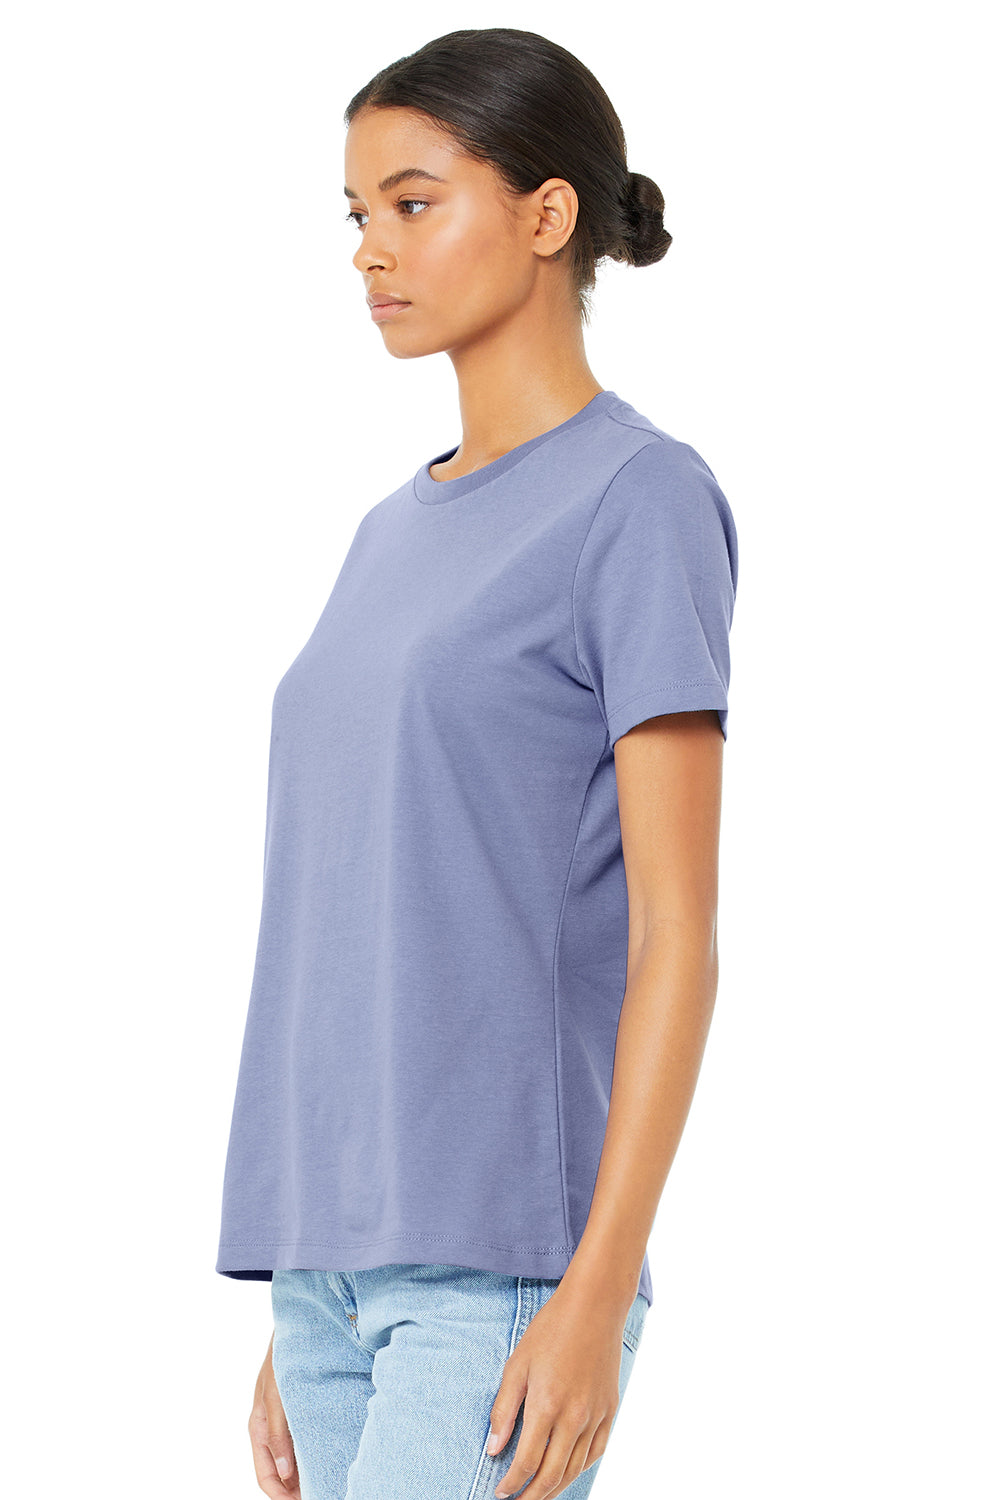 Bella + Canvas BC6400/B6400/6400 Womens Relaxed Jersey Short Sleeve Crewneck T-Shirt Lavender Blue Model 3Q